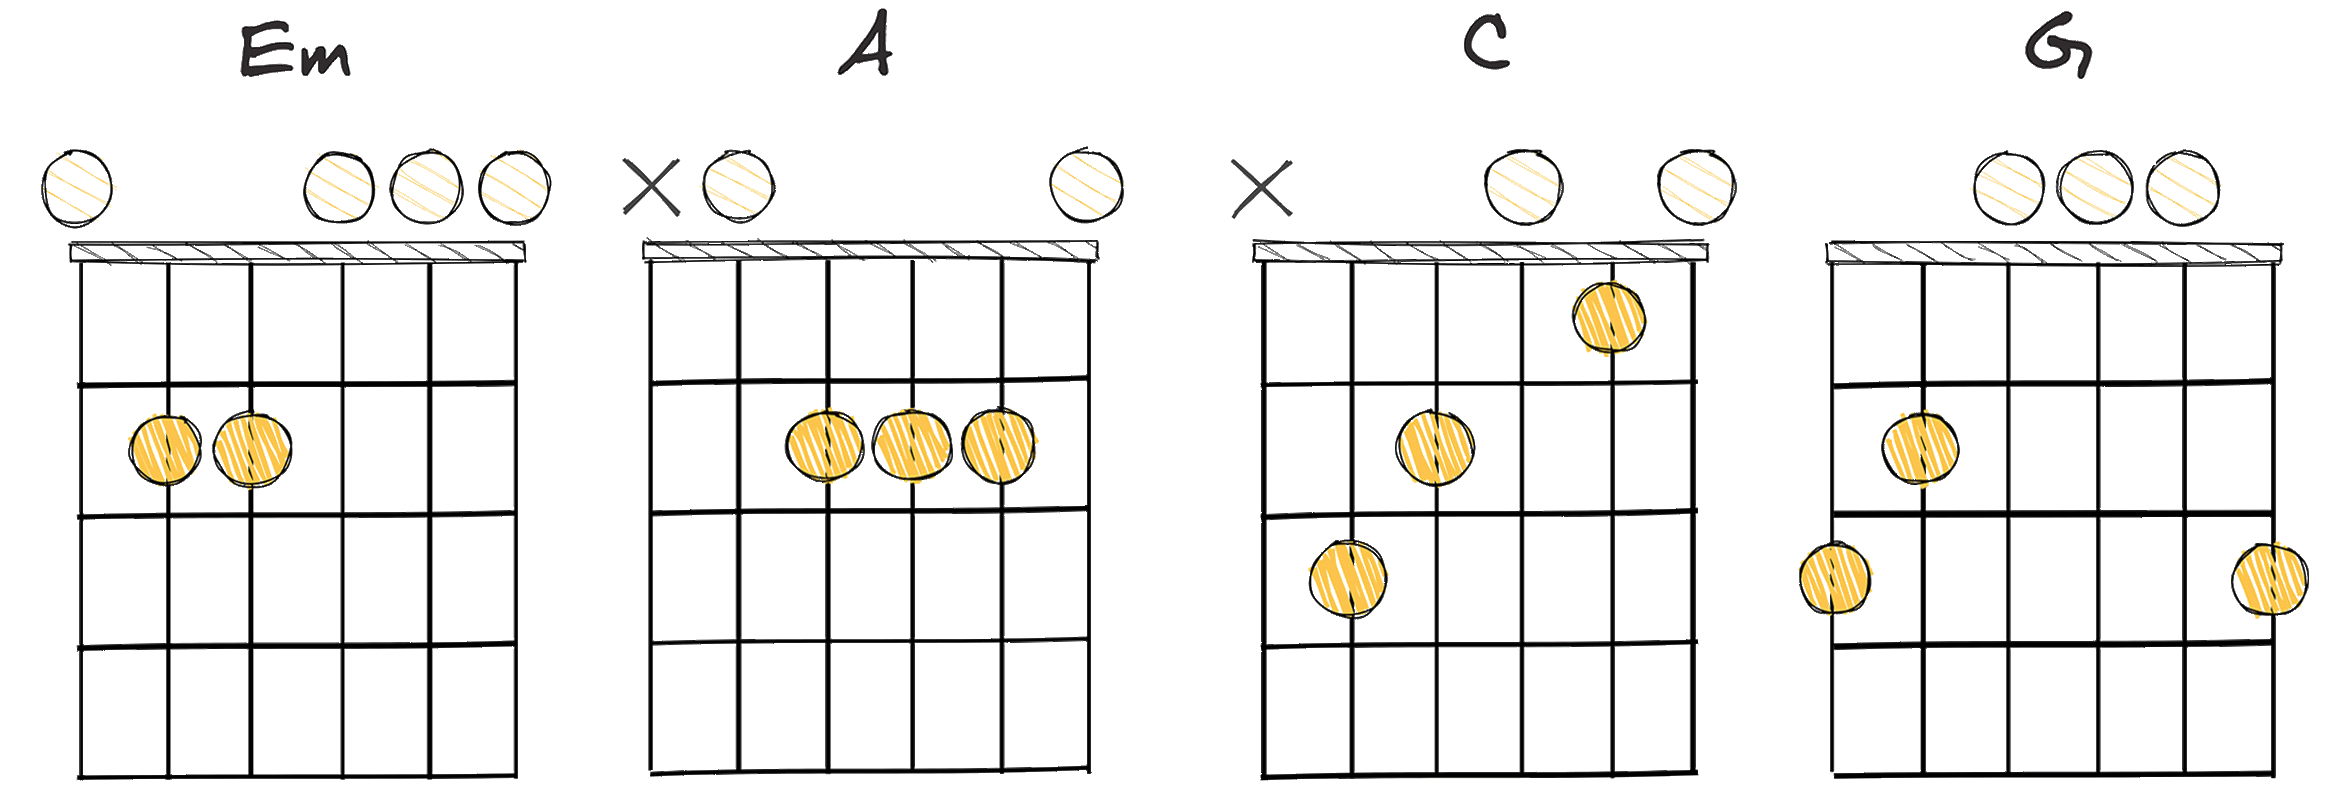 iii-VI-IV-I (3-6-4-1) chords diagram